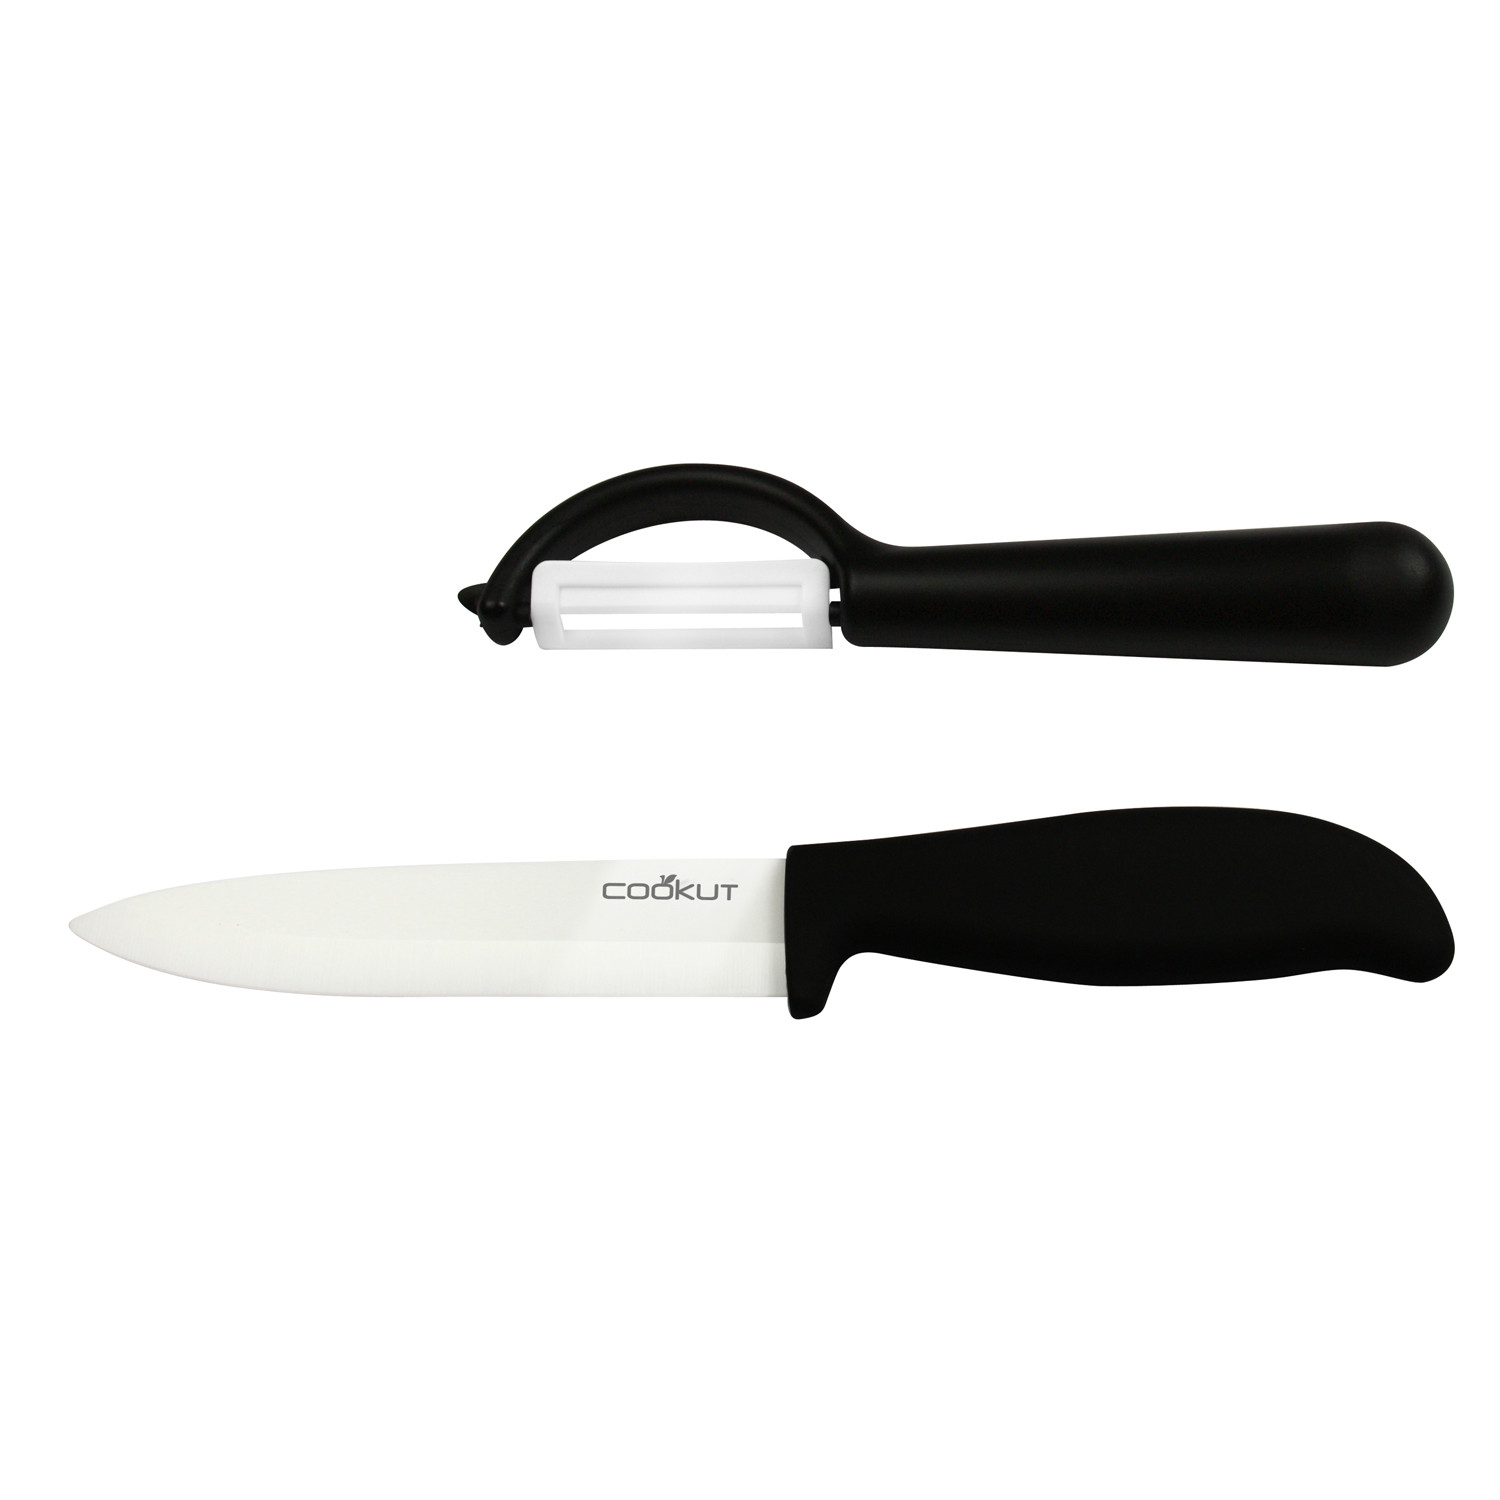 peeler and knife